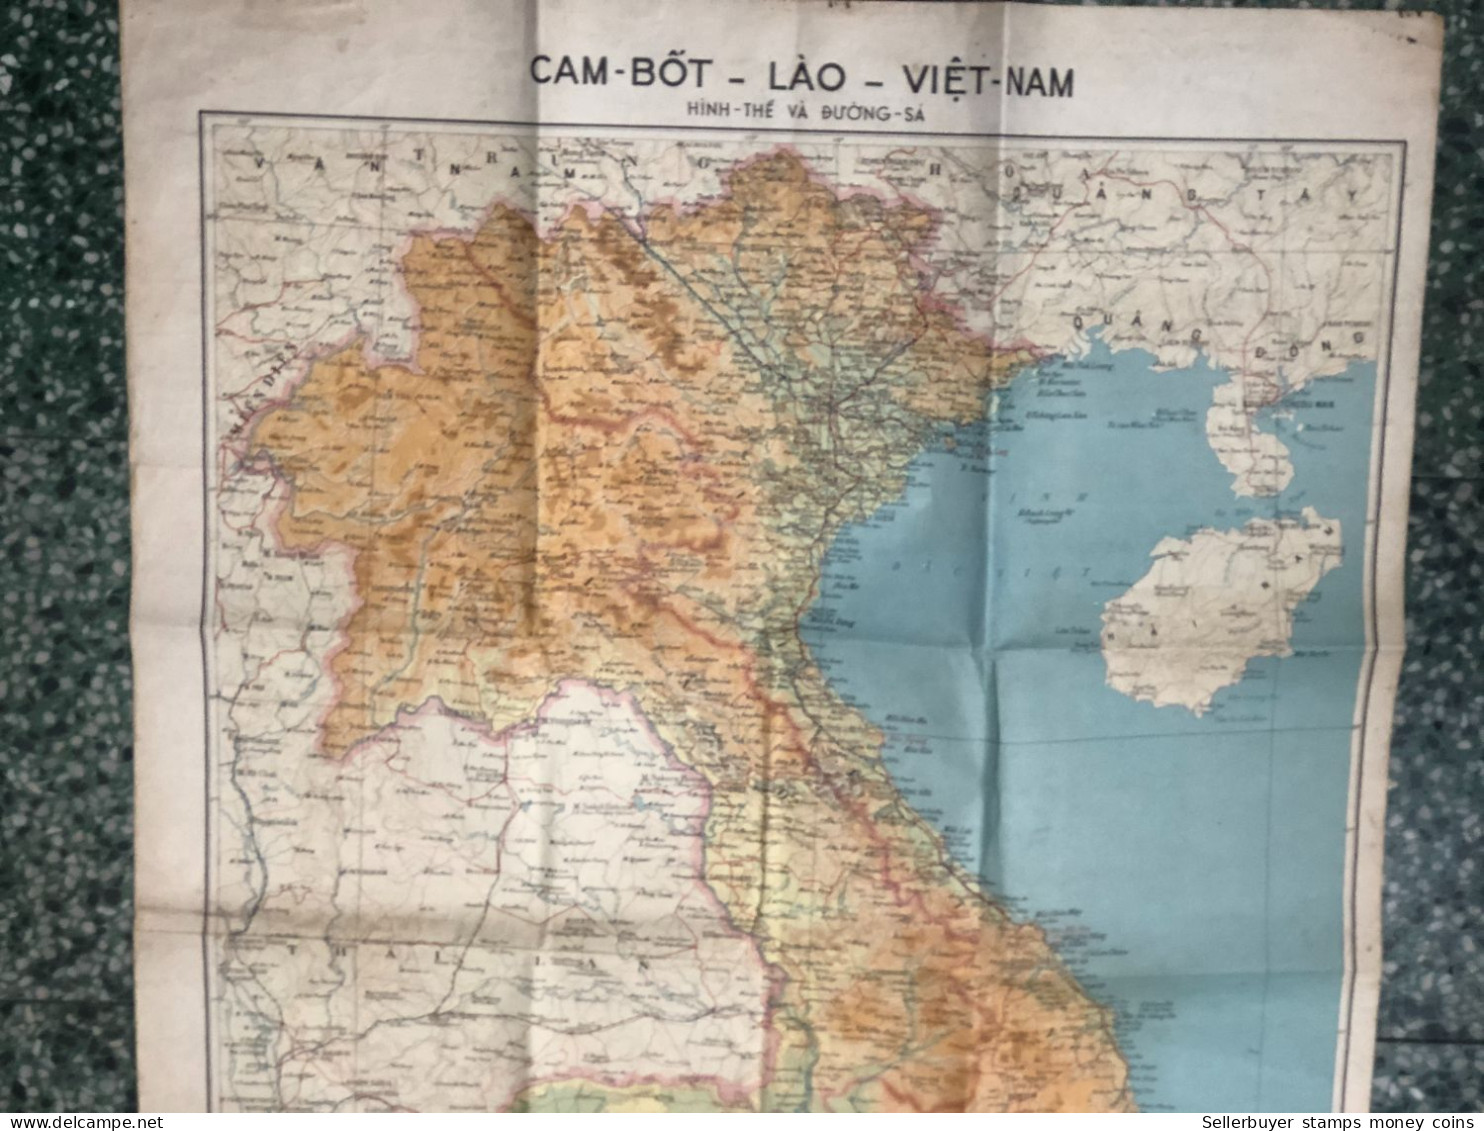 Maps Old-viet Nam Laos Cambodia Hinh The Va Duong Sa Before 1956-66-1 Pcs Very Rare - Cartes Topographiques